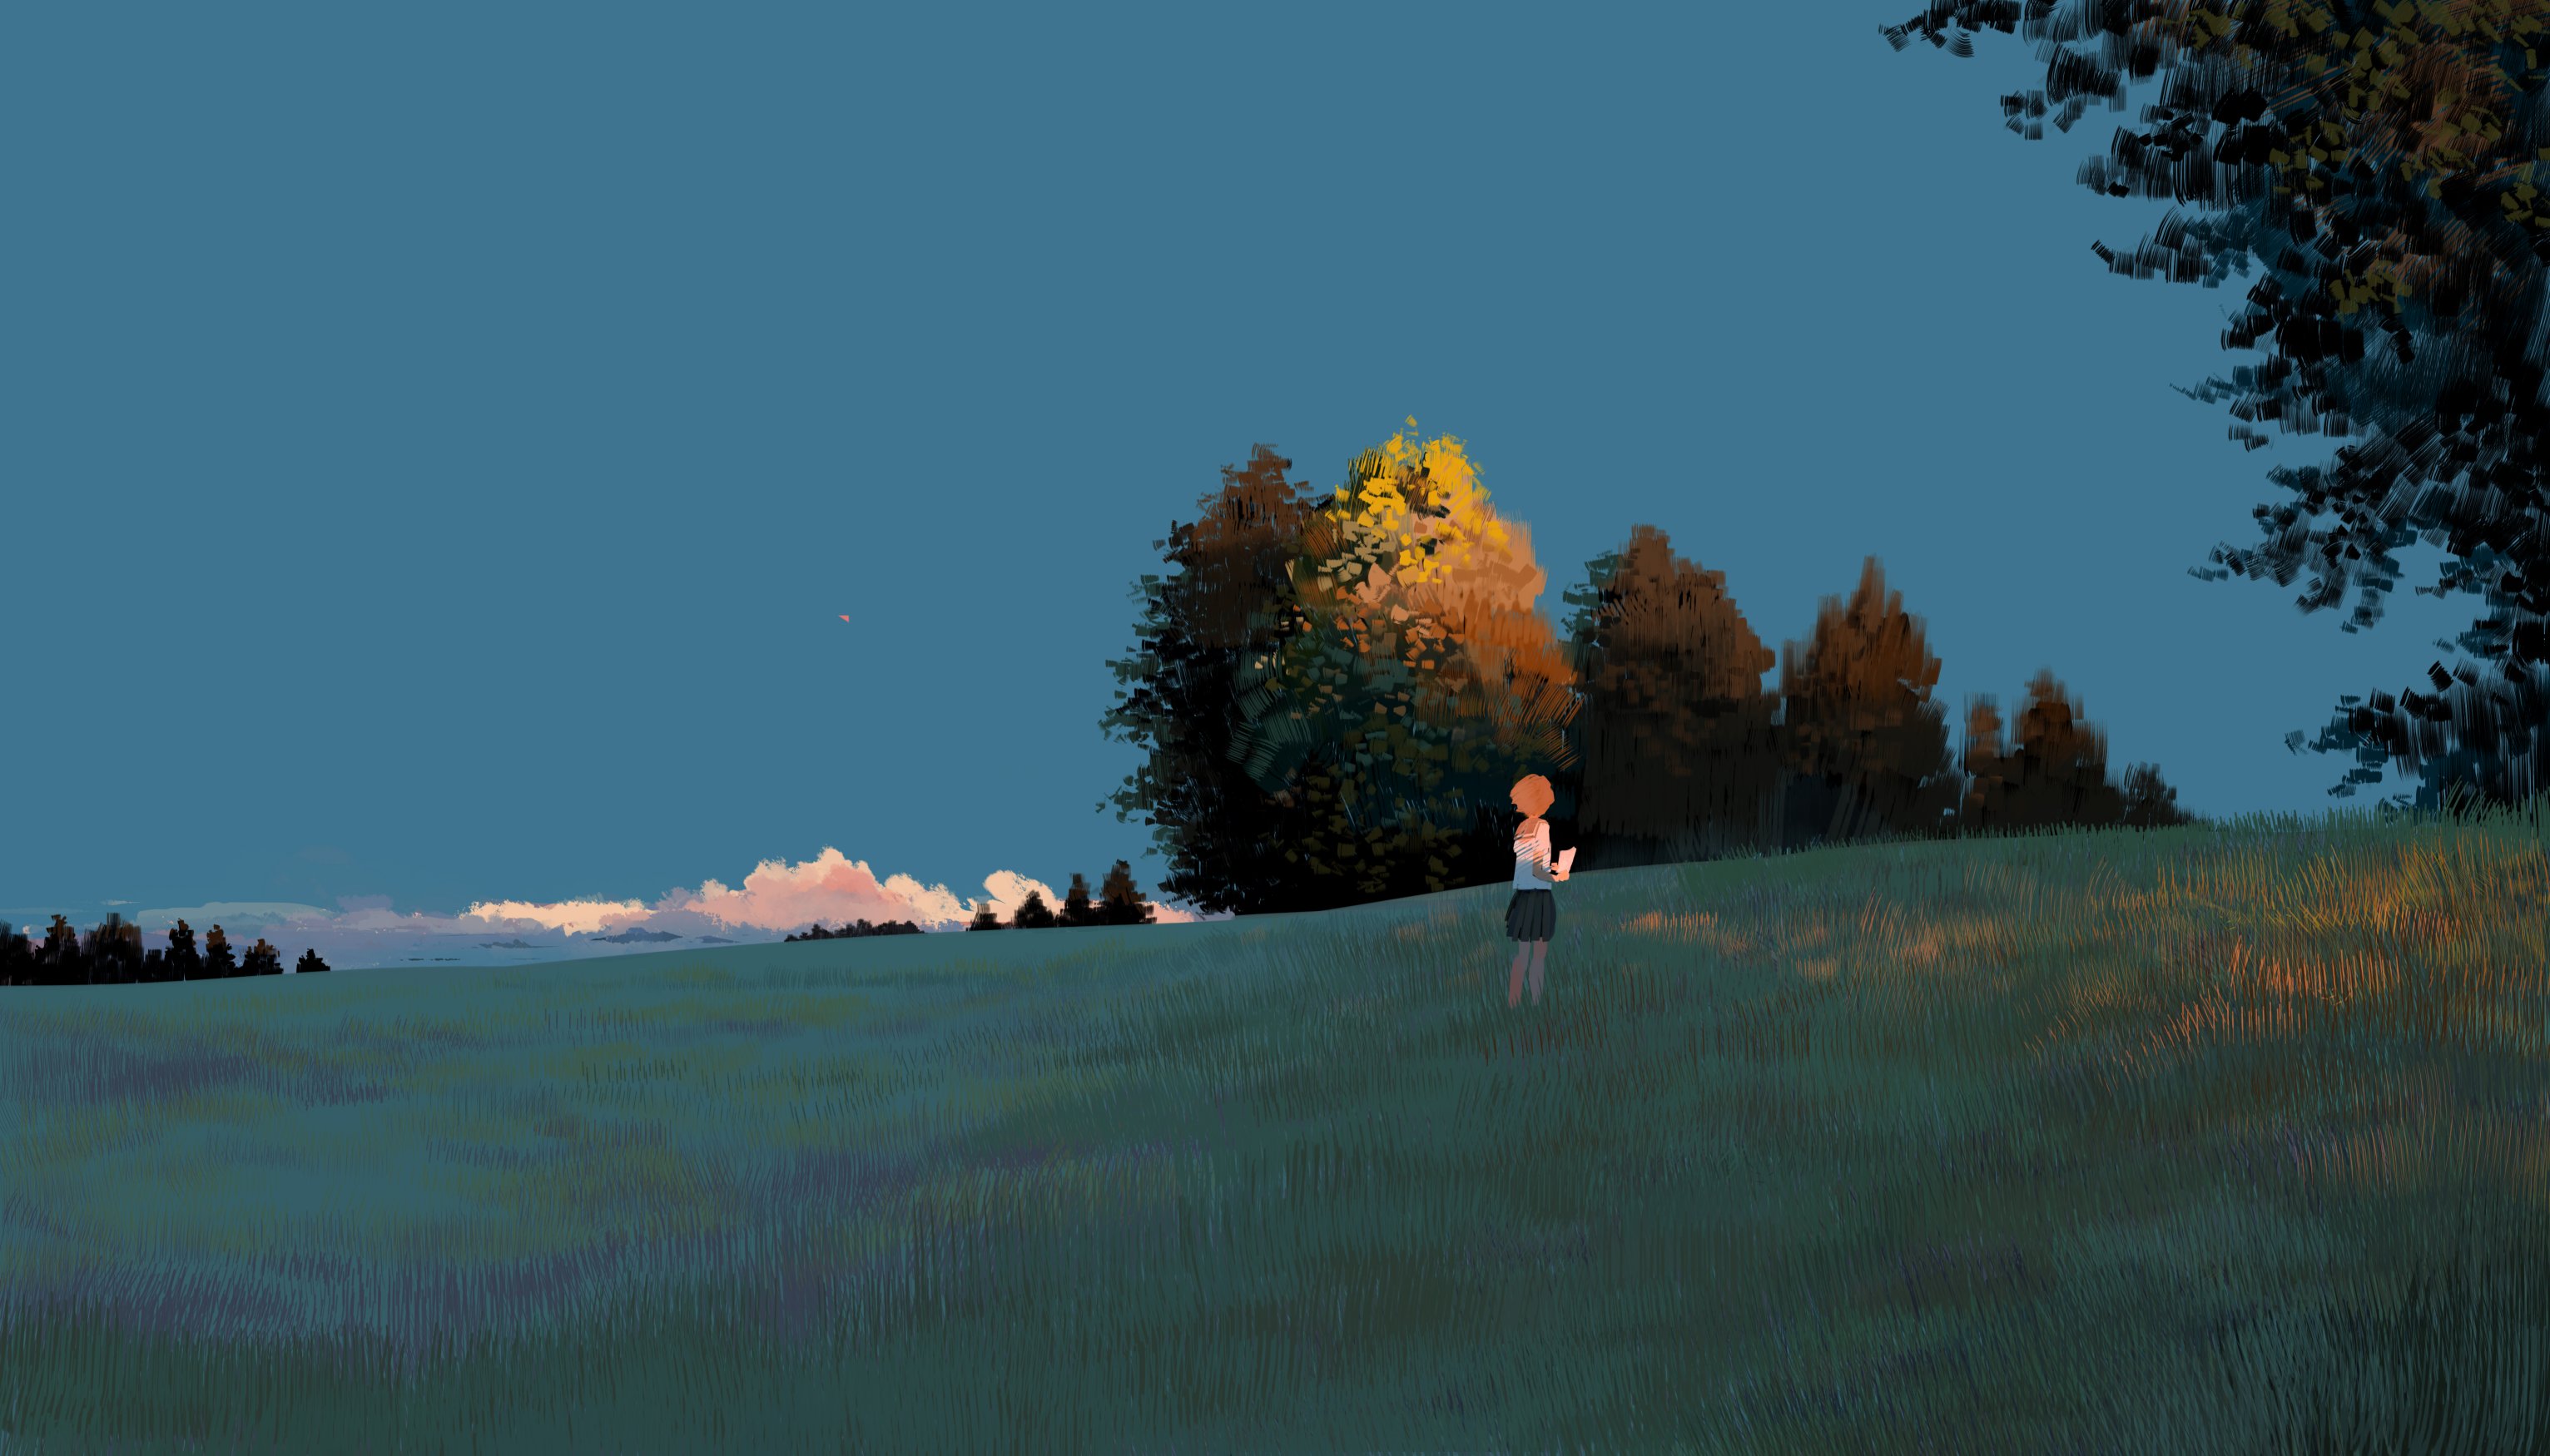 Digital Art Digital Painting Plains Grass Sunset Peaceful Bangjoy Schoolgirl School Uniform Trees Sk 3064x1750